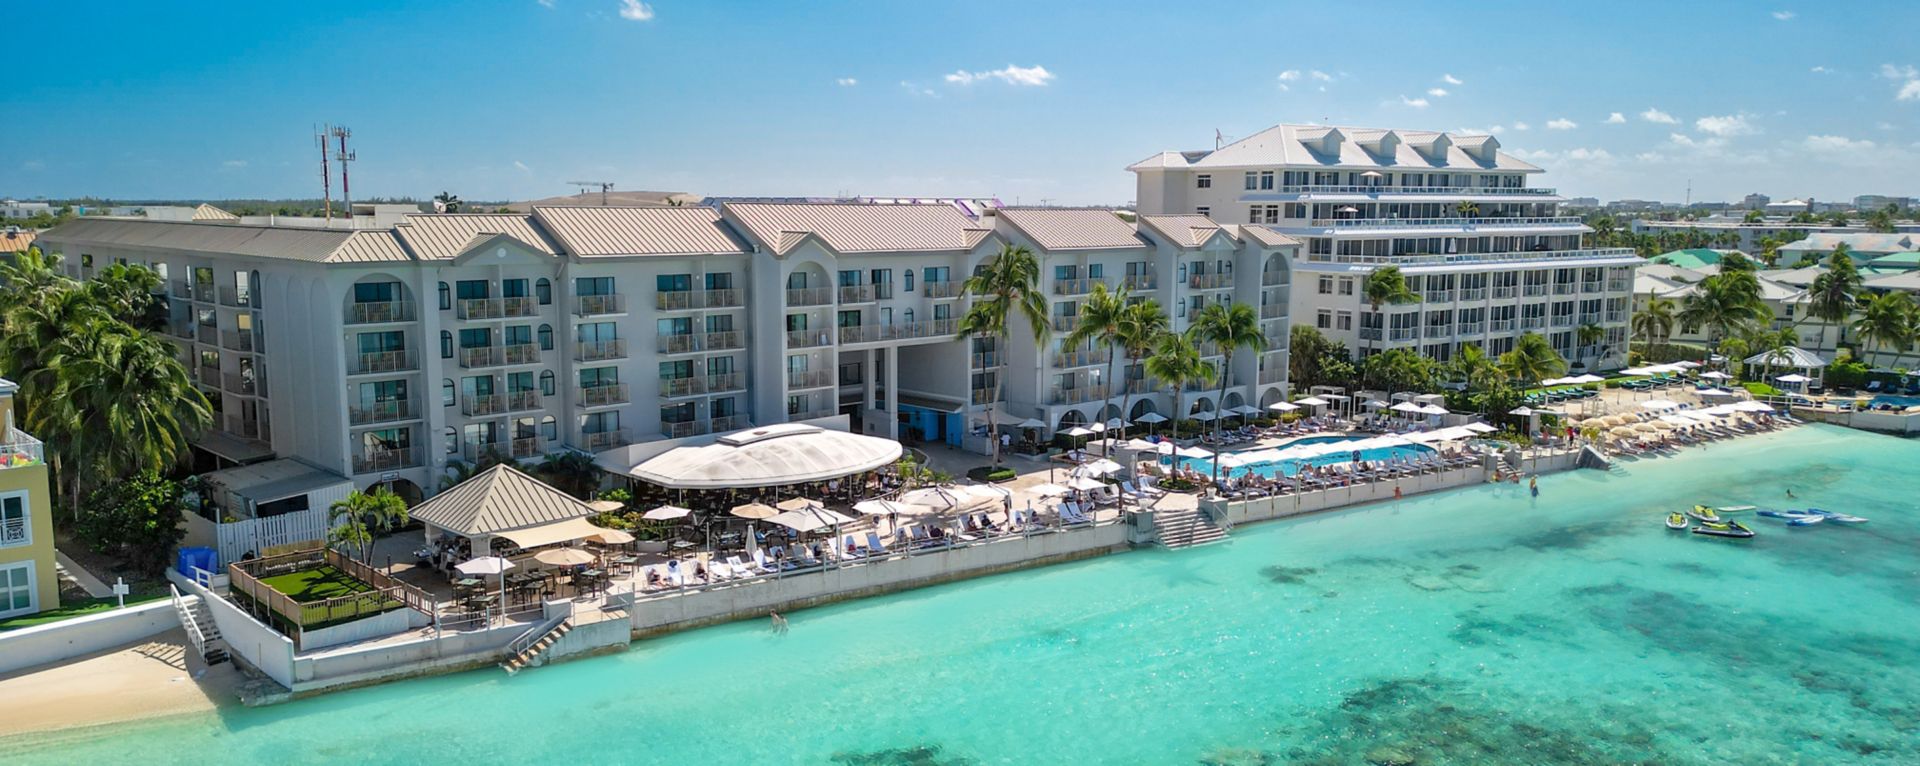 Best Grand Cayman Resorts